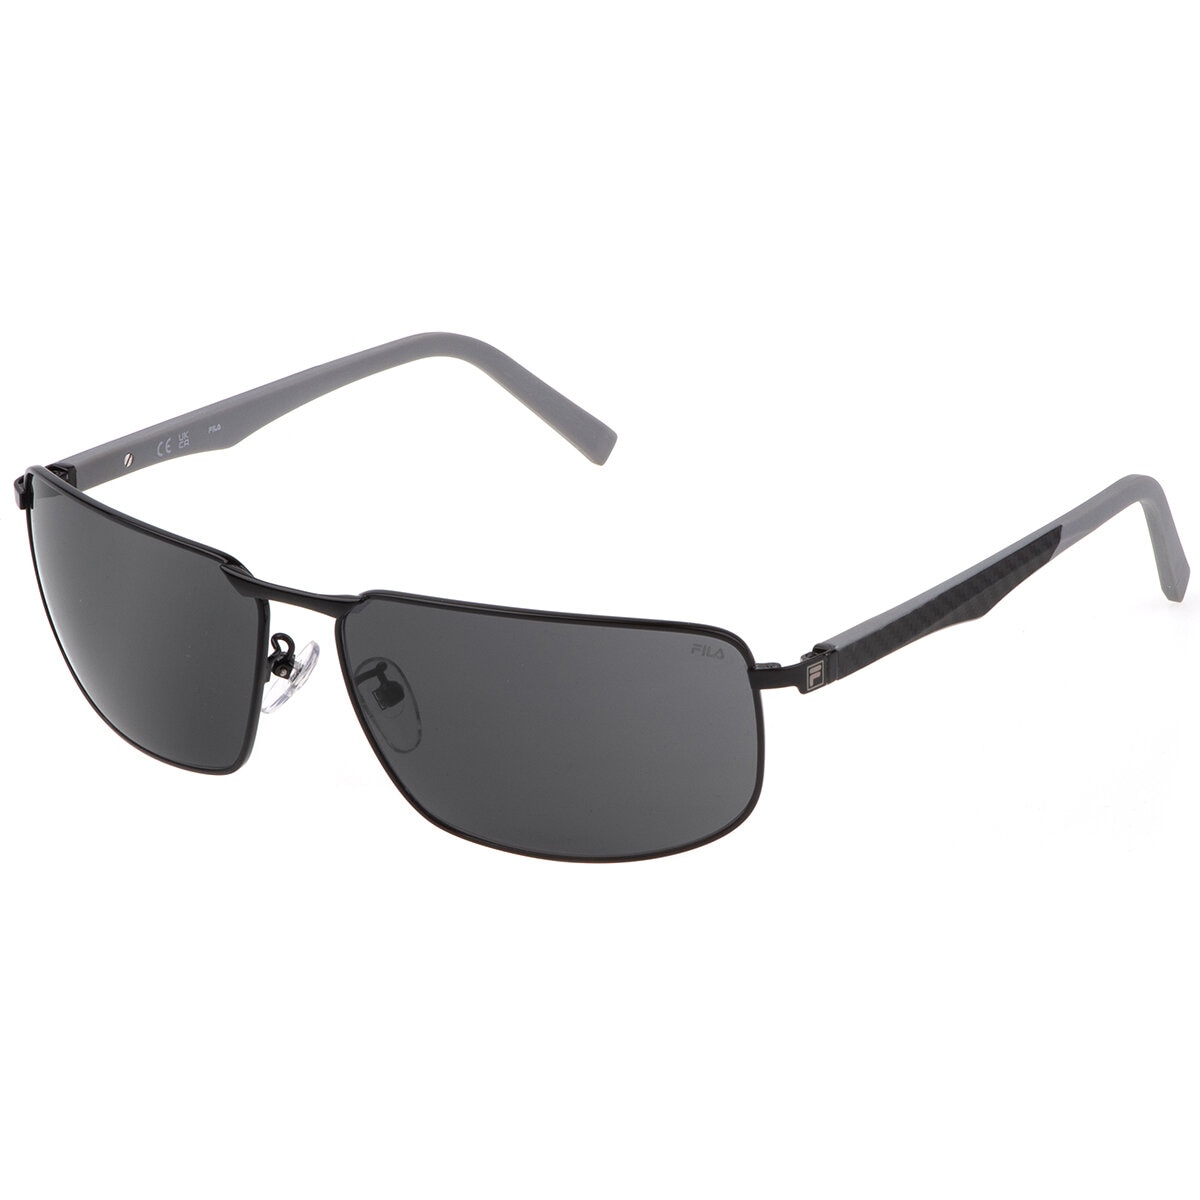 Fila SFI446 Men's Sunglasses